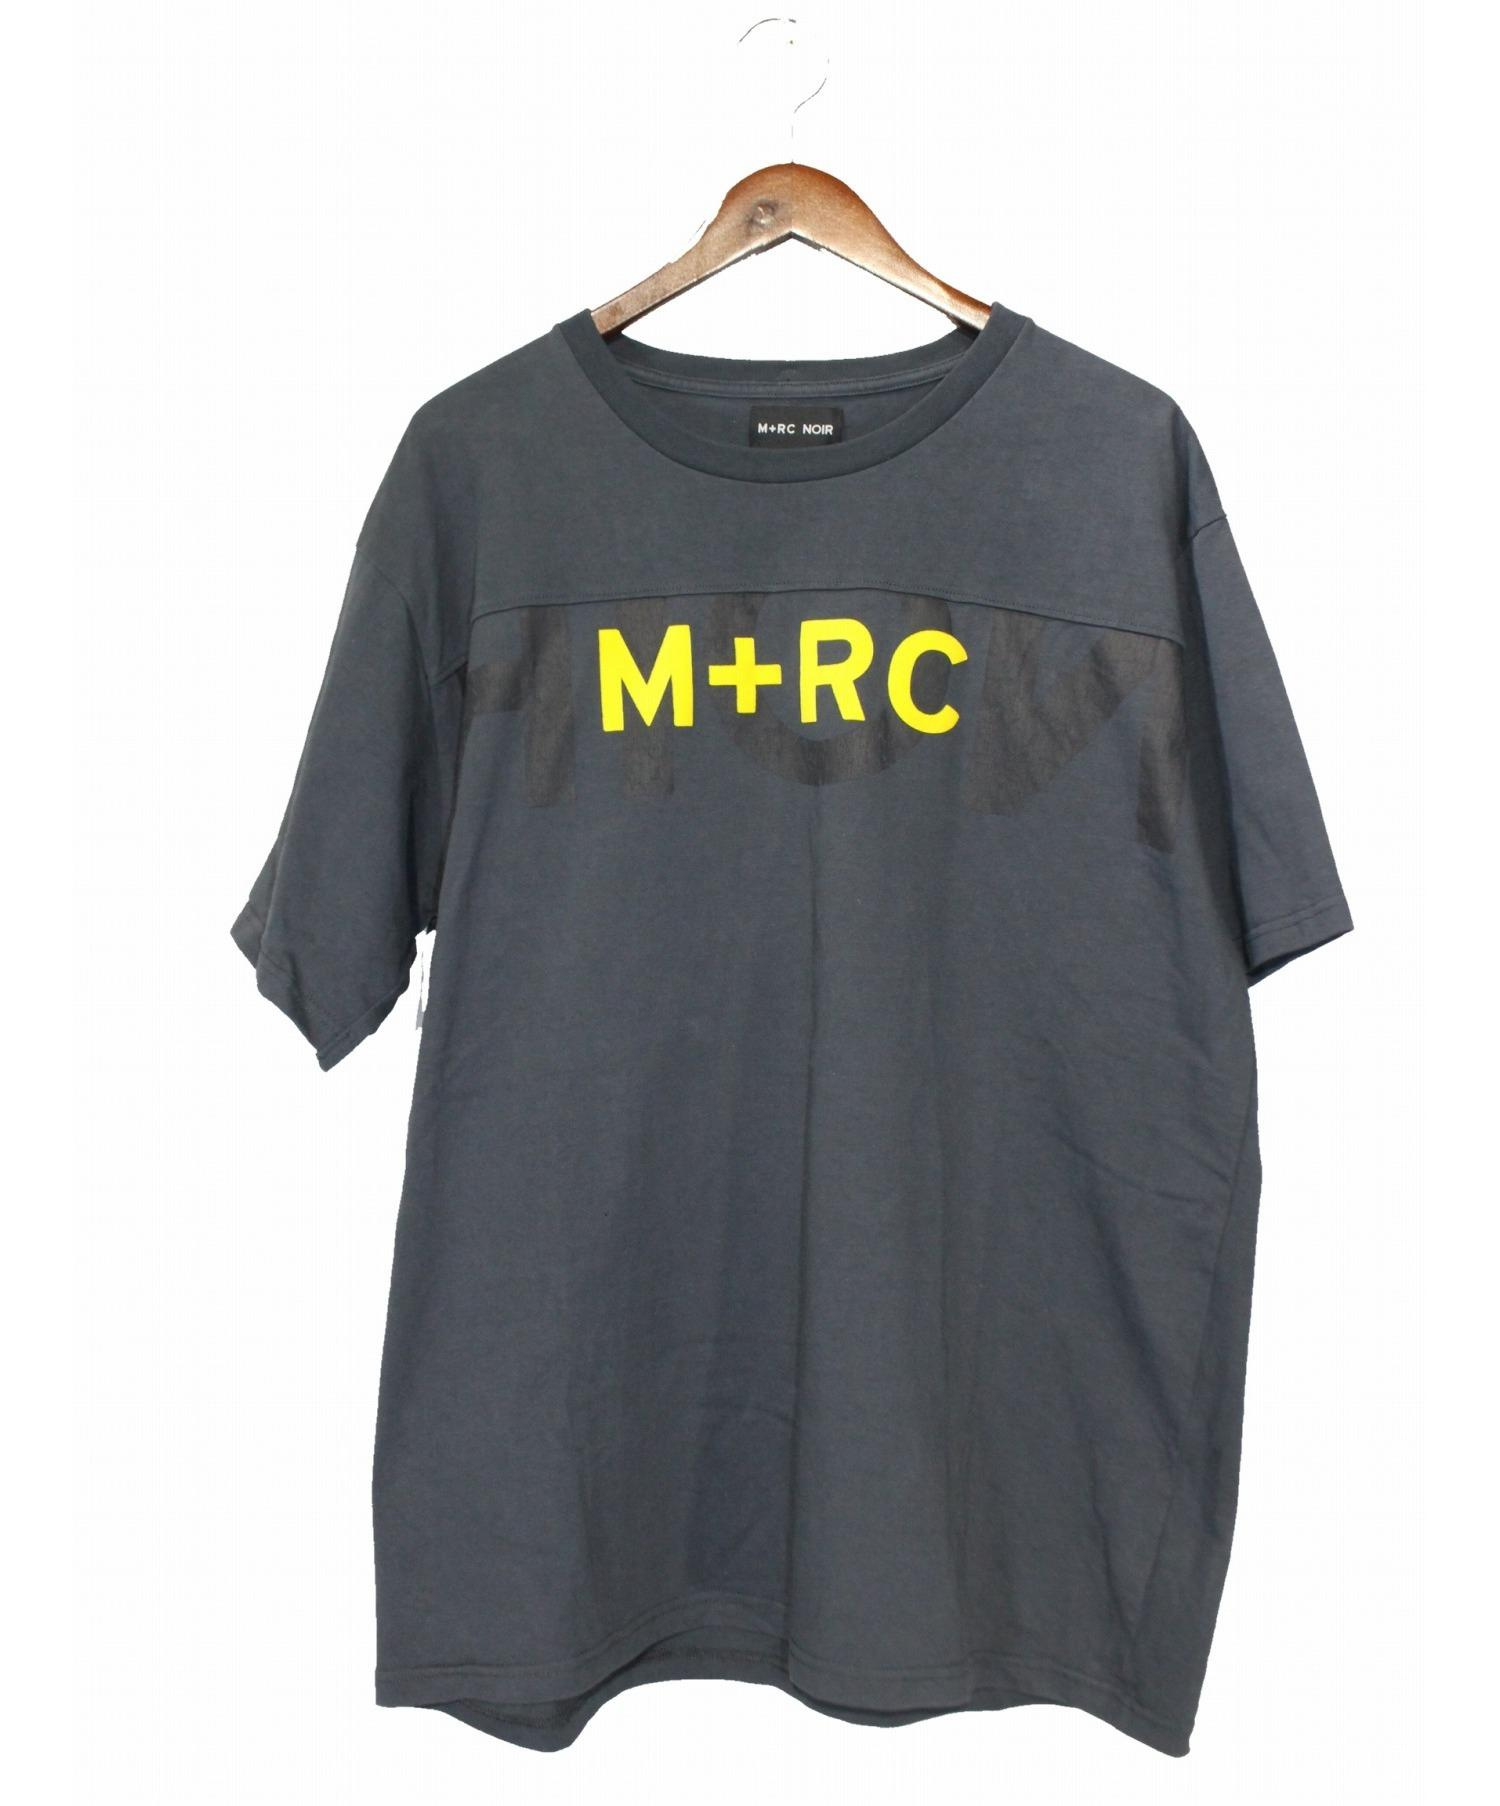 M+RC NOIR (マルシェノア) ロゴTシャツ サイズ:XL